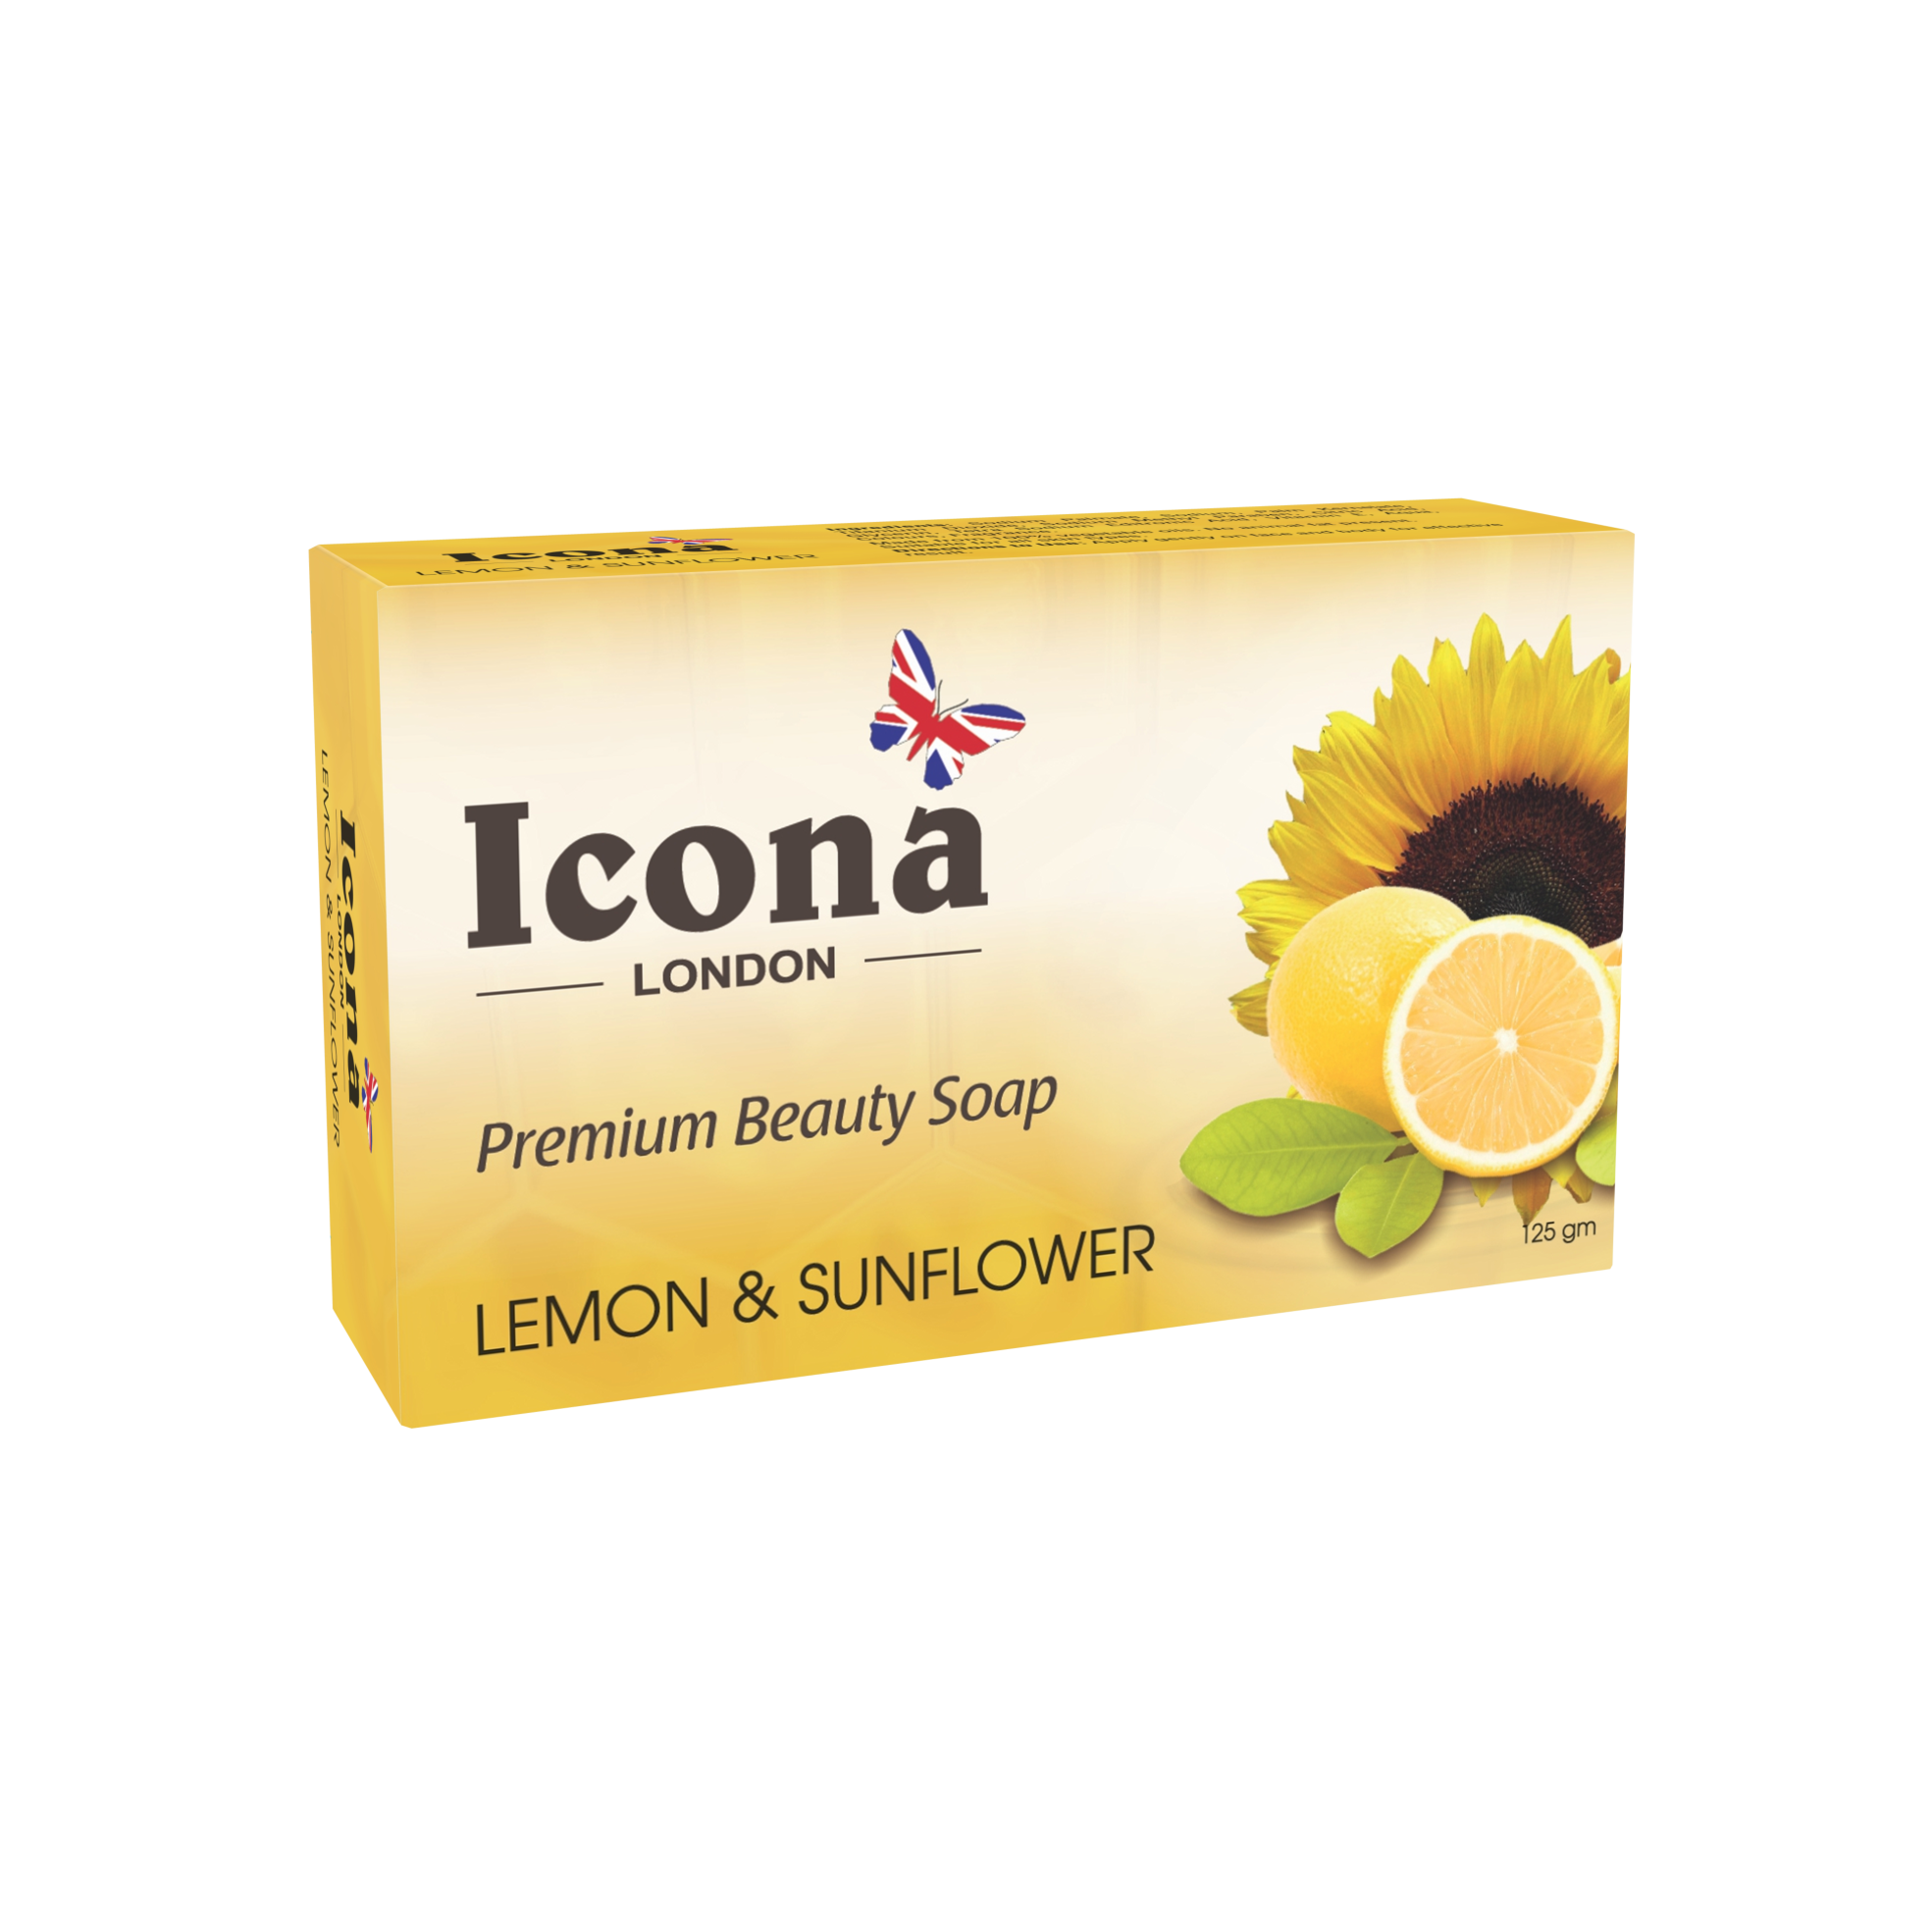 Icona London Beauty Soap (Lemon & sunflower)